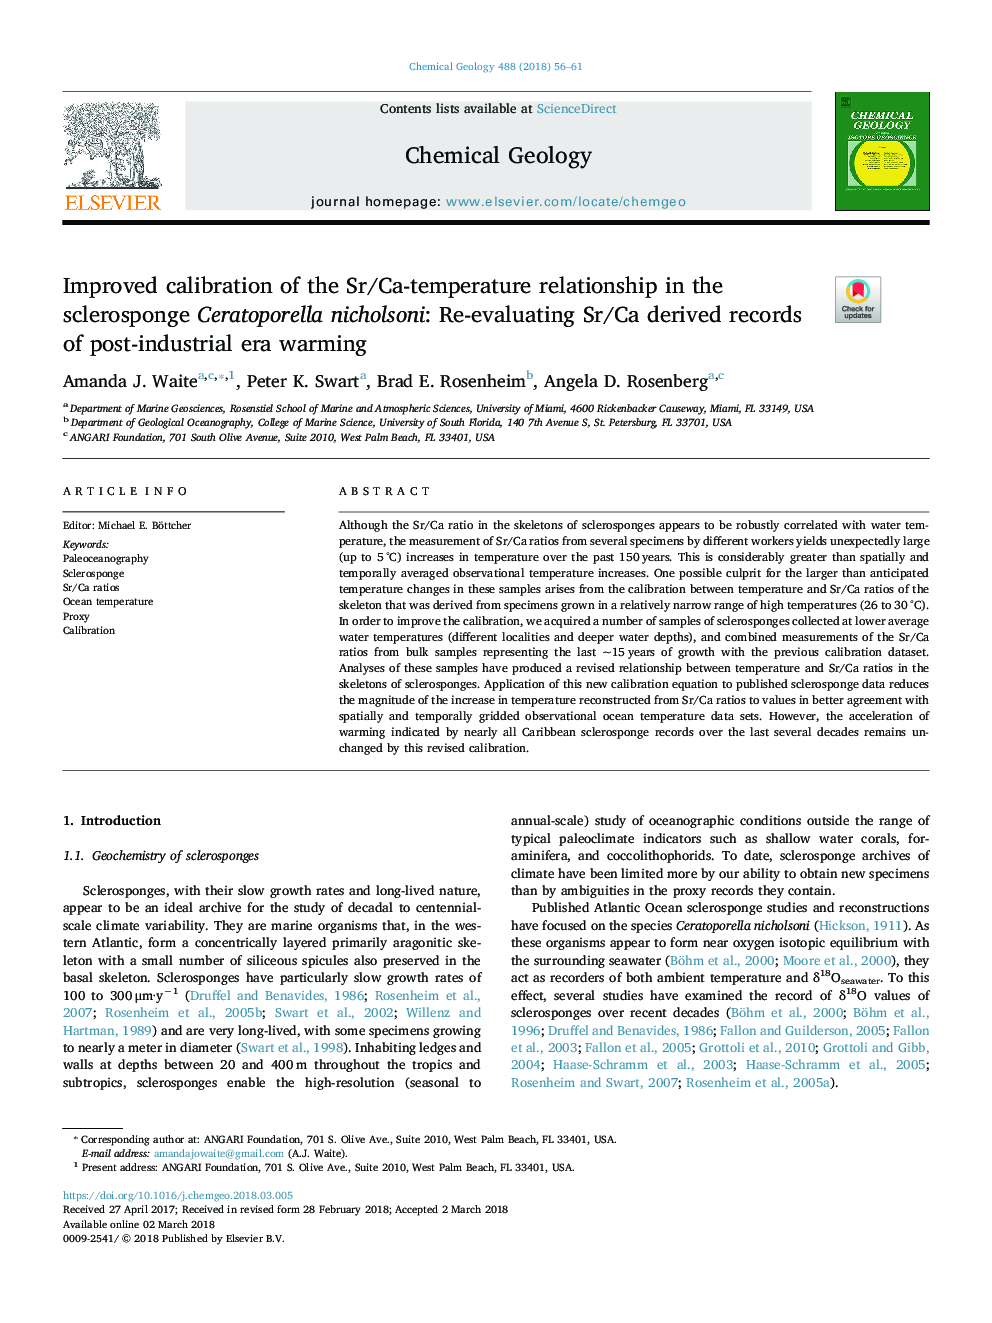 Improved calibration of the Sr/Ca-temperature relationship in the sclerosponge Ceratoporella nicholsoni: Re-evaluating Sr/Ca derived records of post-industrial era warming